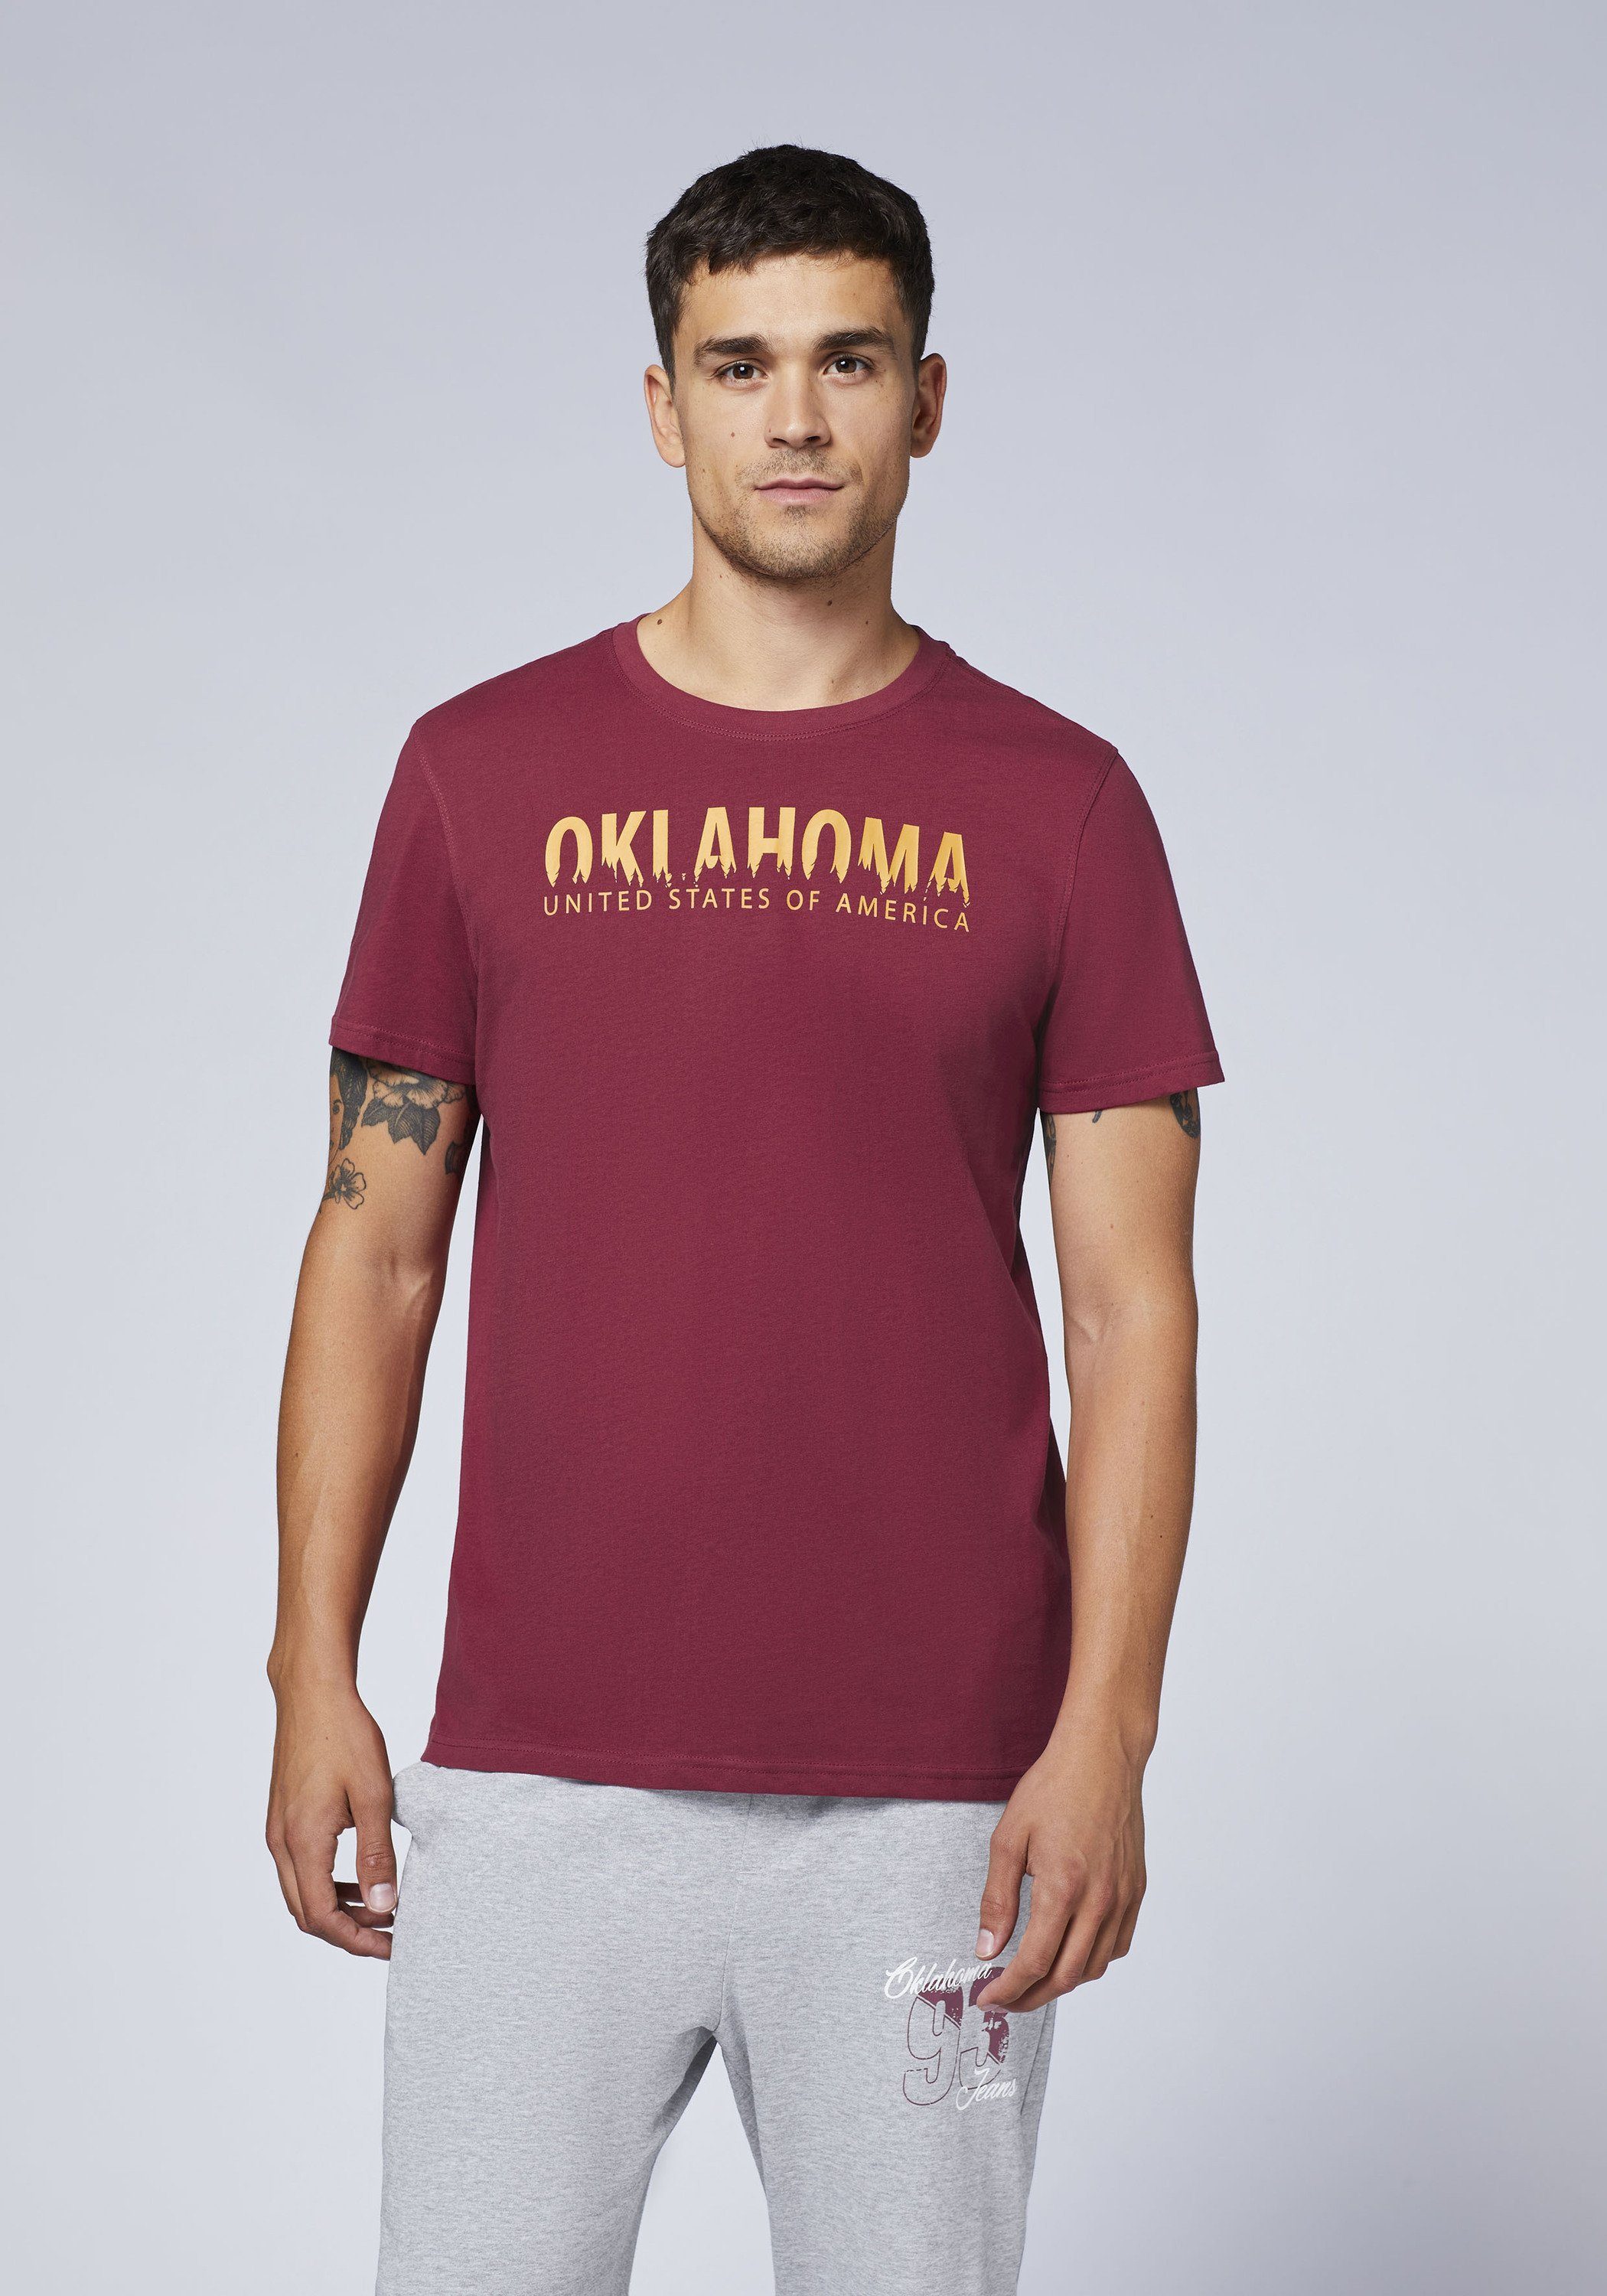 Red Oklahoma im Print-Shirt 19-1934 Jeans Tibetan Nature-Label-Look